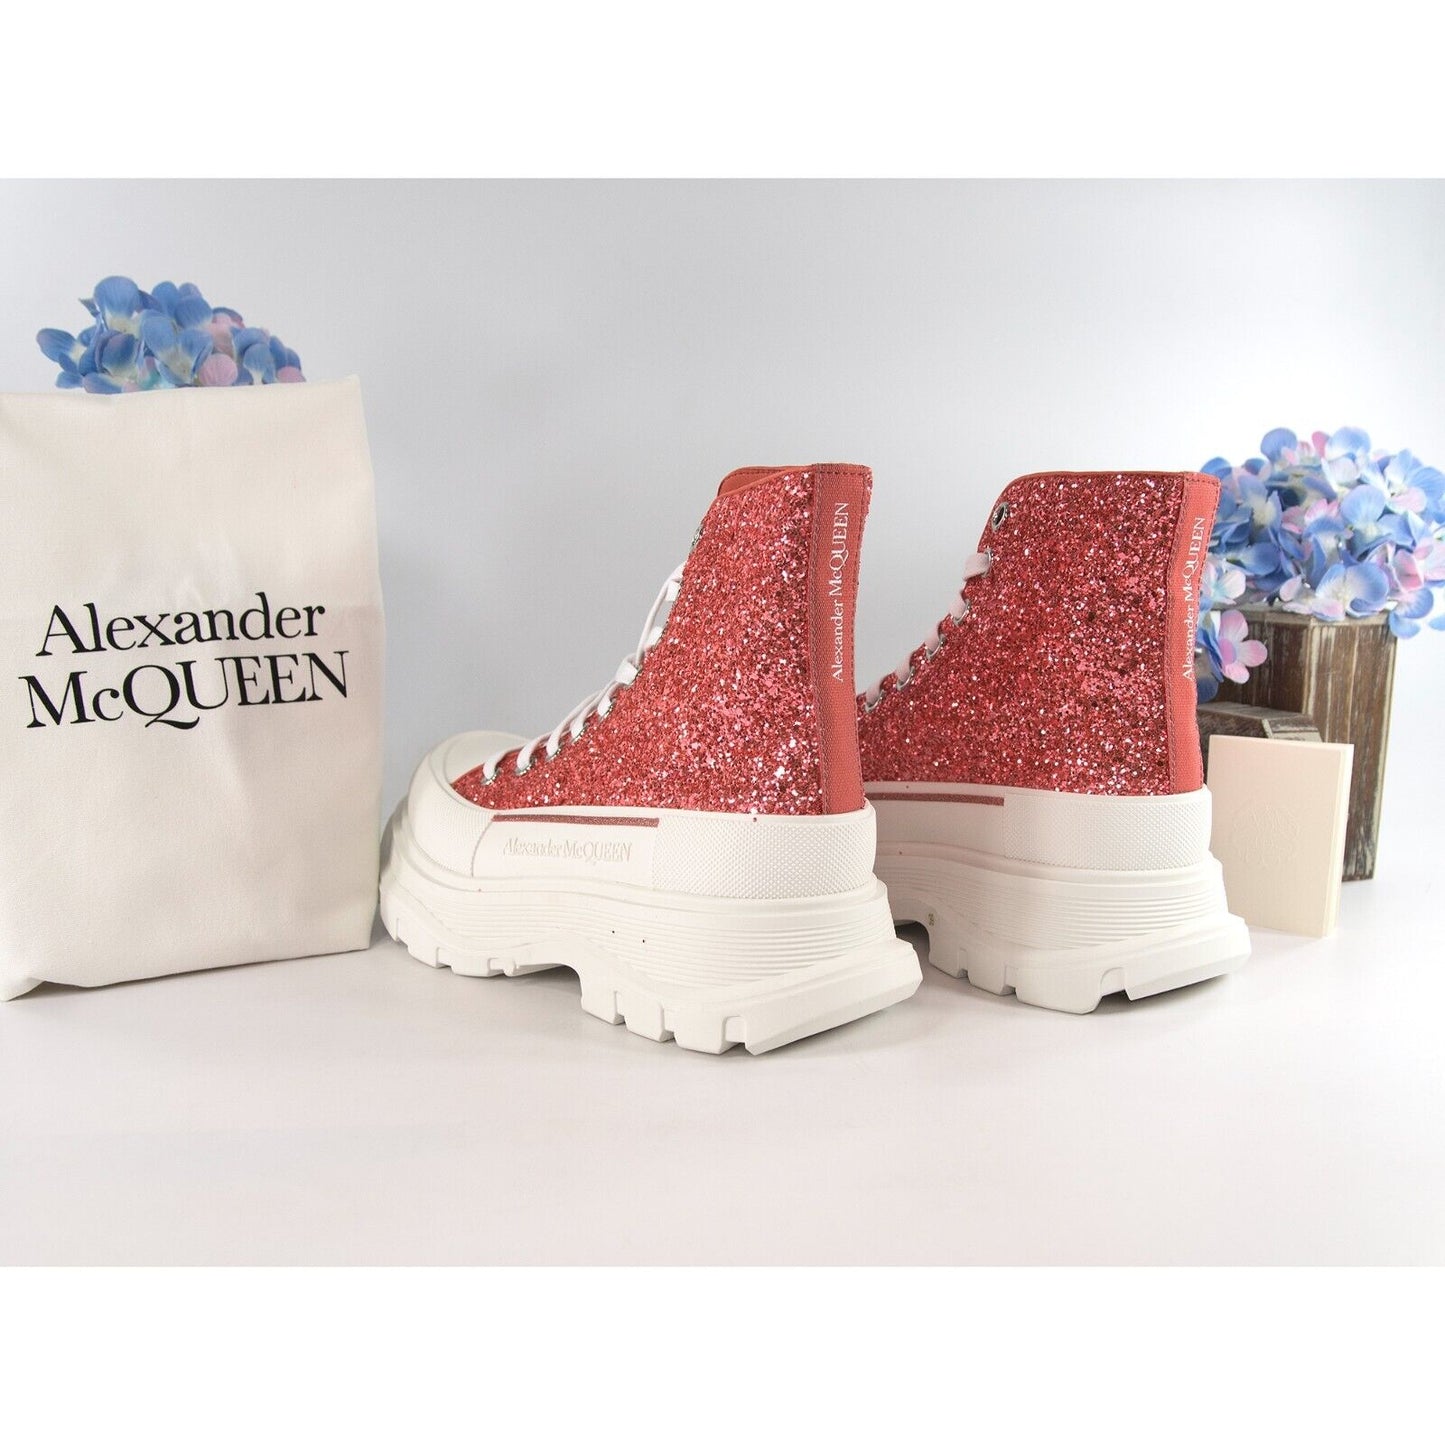 Alexander McQueen Deck Tread Slick Rose Gold Glitter High Top Sneakers 39 NIB